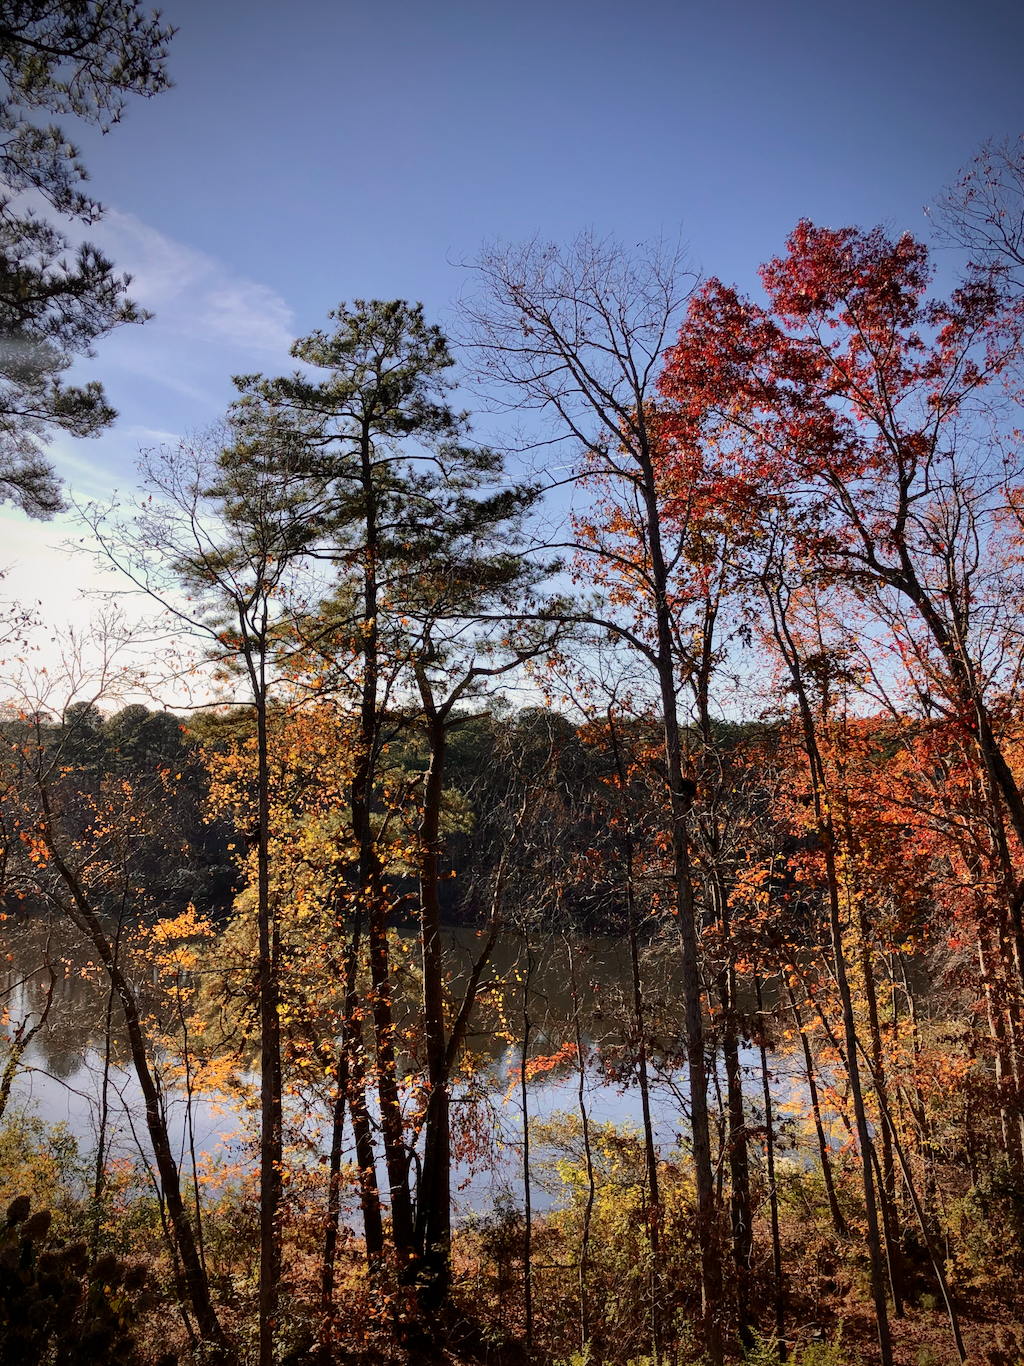 Fall trees and the lake.